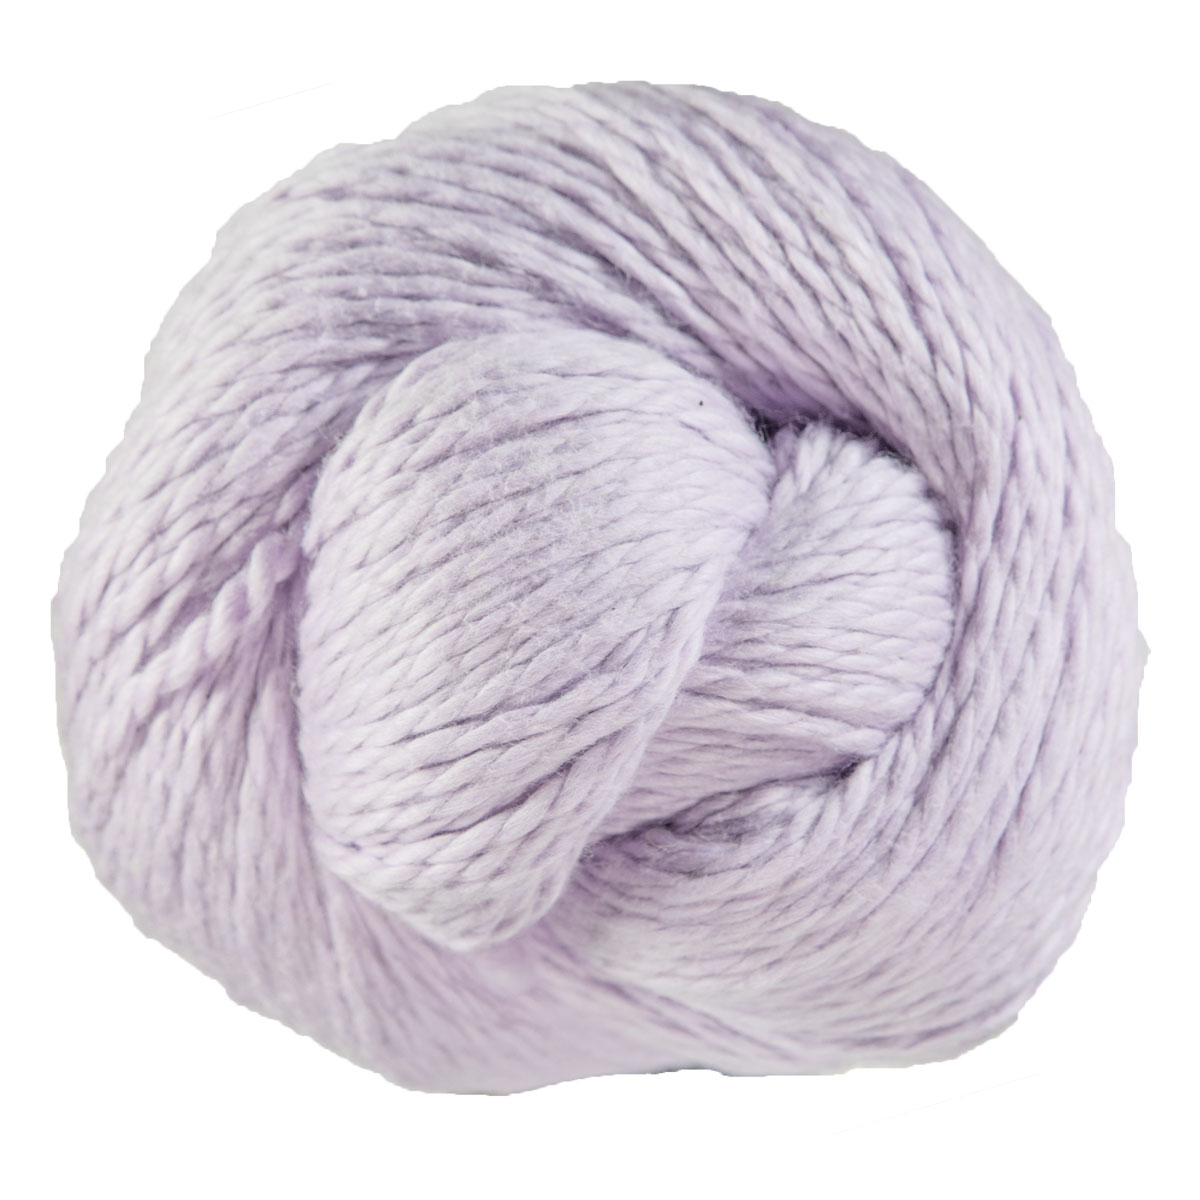 Blue Sky Fibers Organic Cotton Yarn - 624 - Indigo at Jimmy Beans Wool